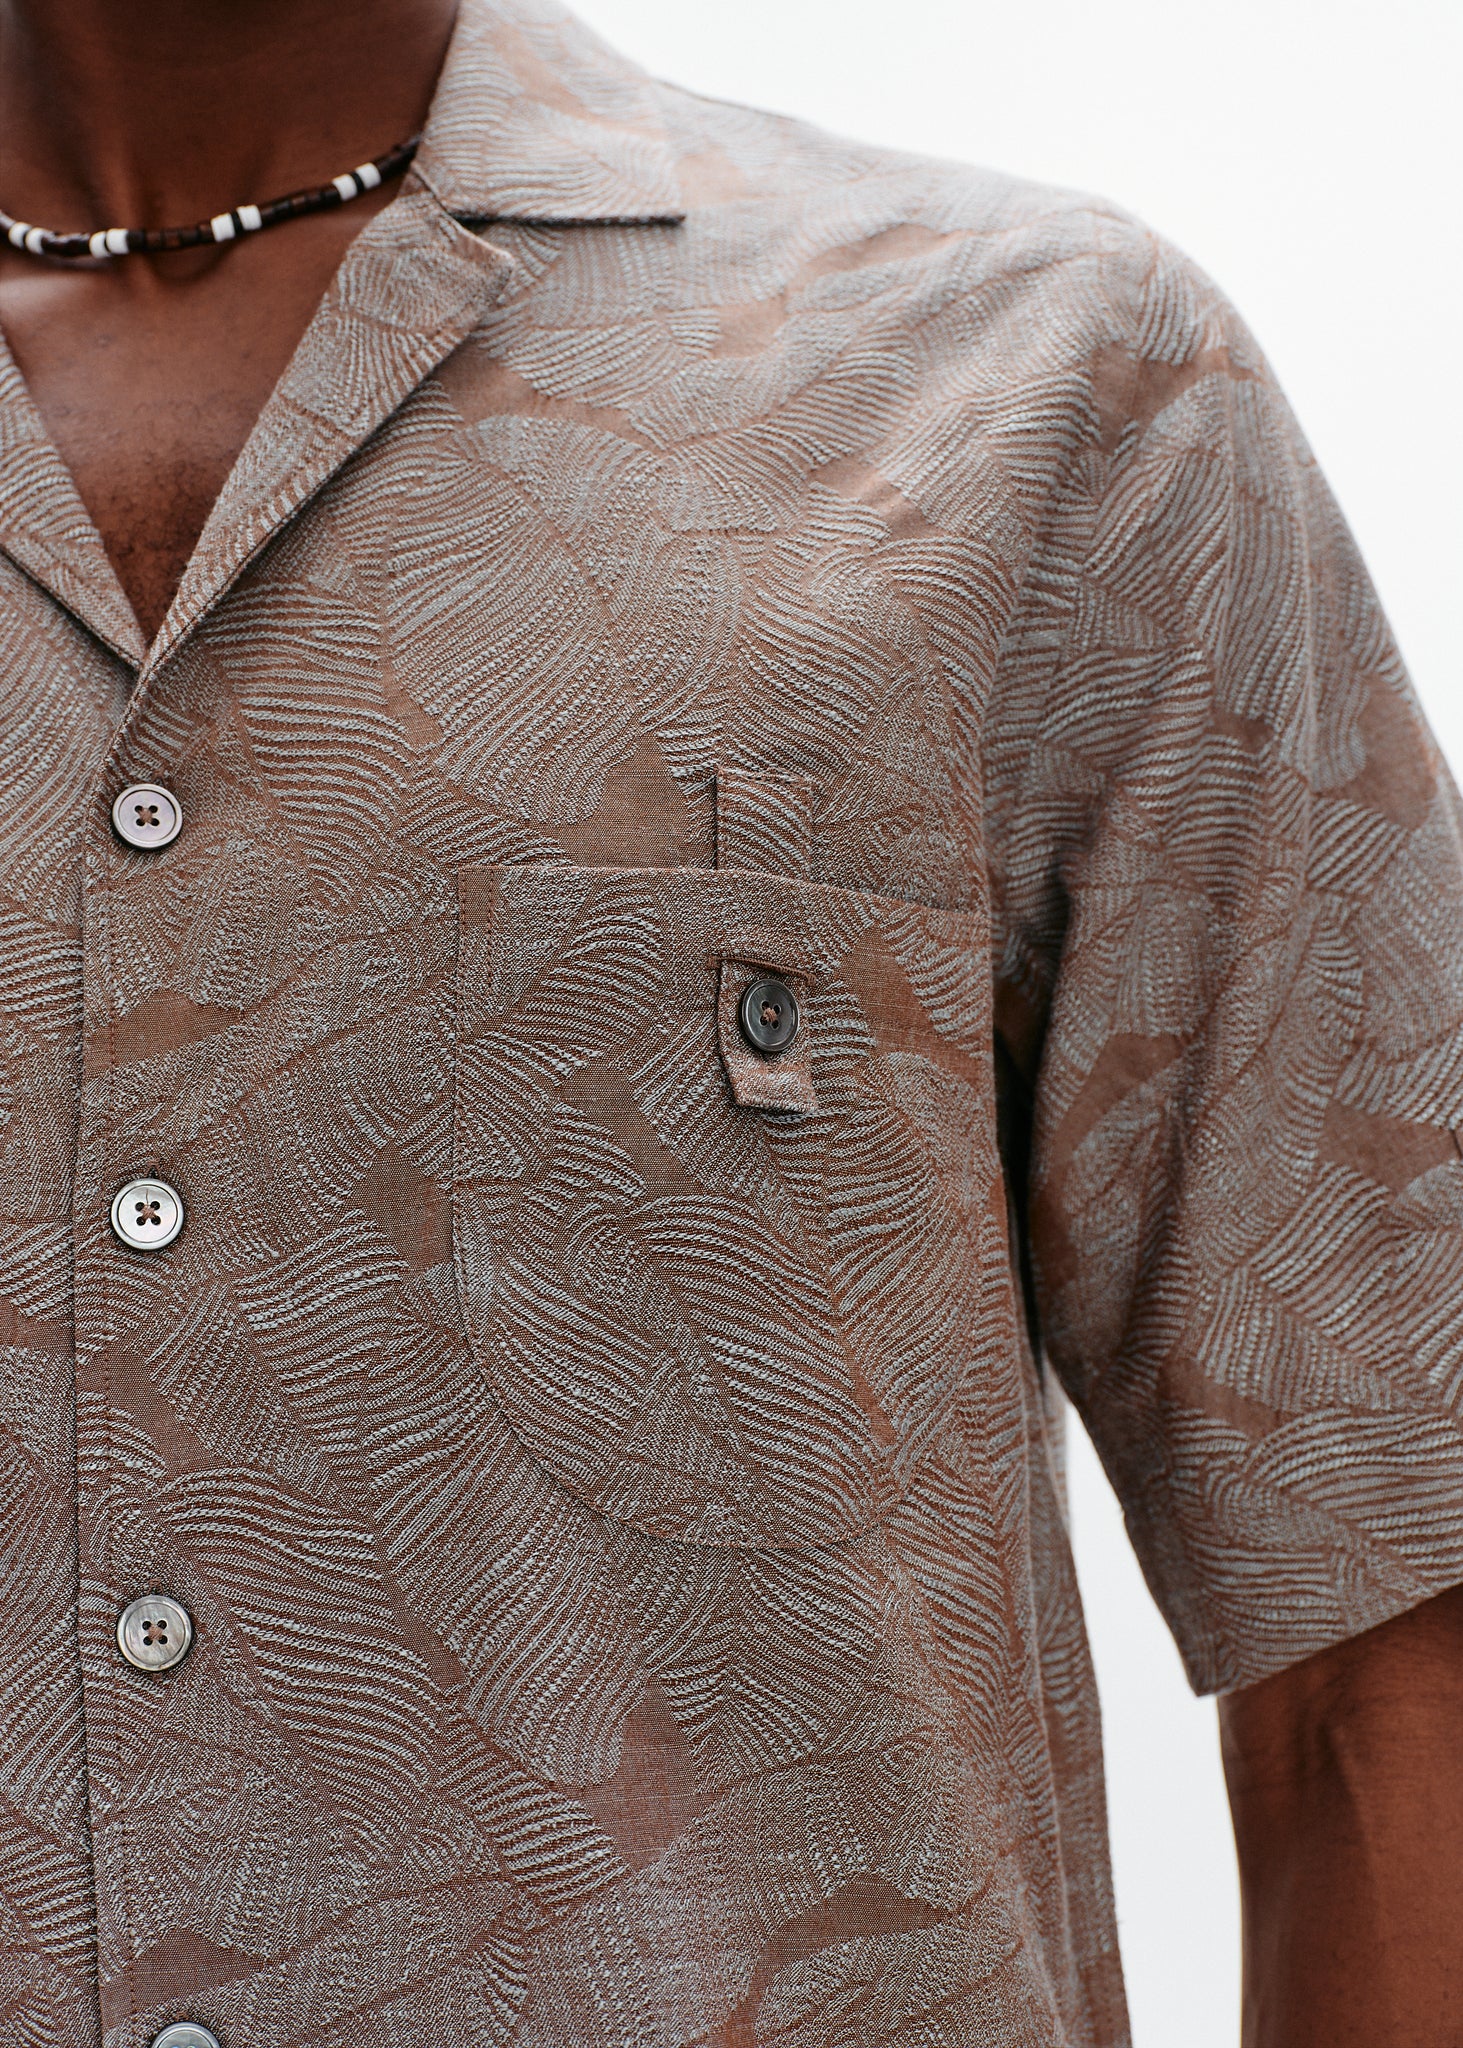 Iridescent light brown foliage jacquard short sleeve shirt